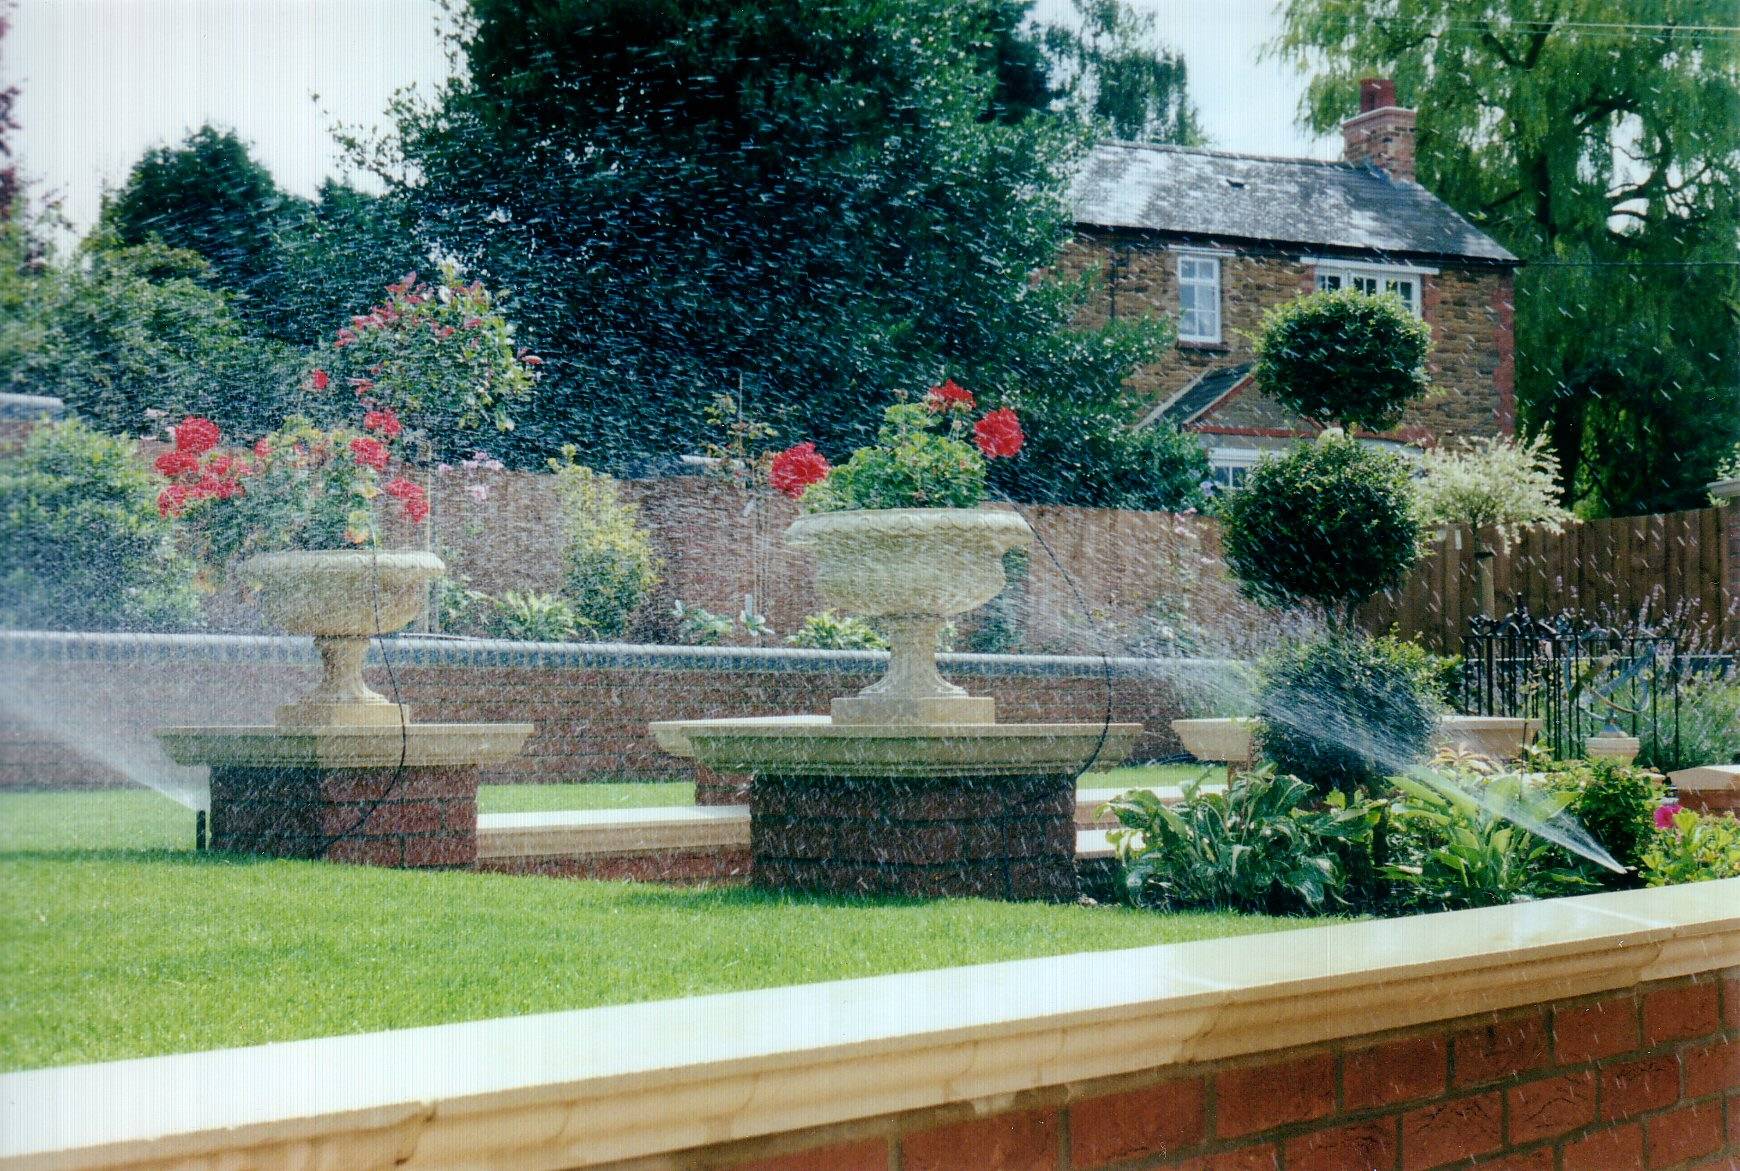 Garden with pop up sprinklers